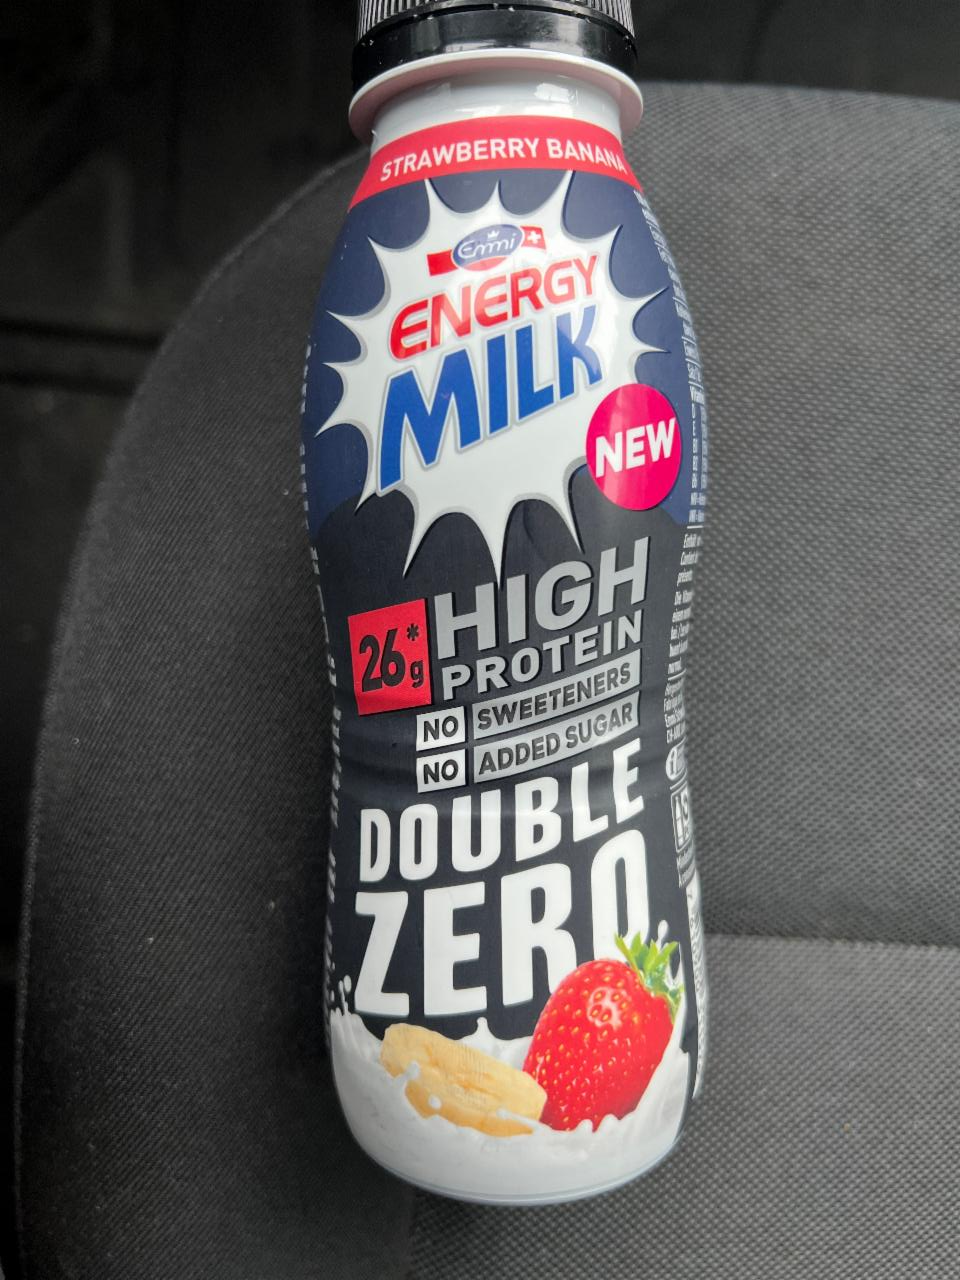 Fotografie - Energy Milk 26g High Protein Double Zero Strawberry Banana Emmi